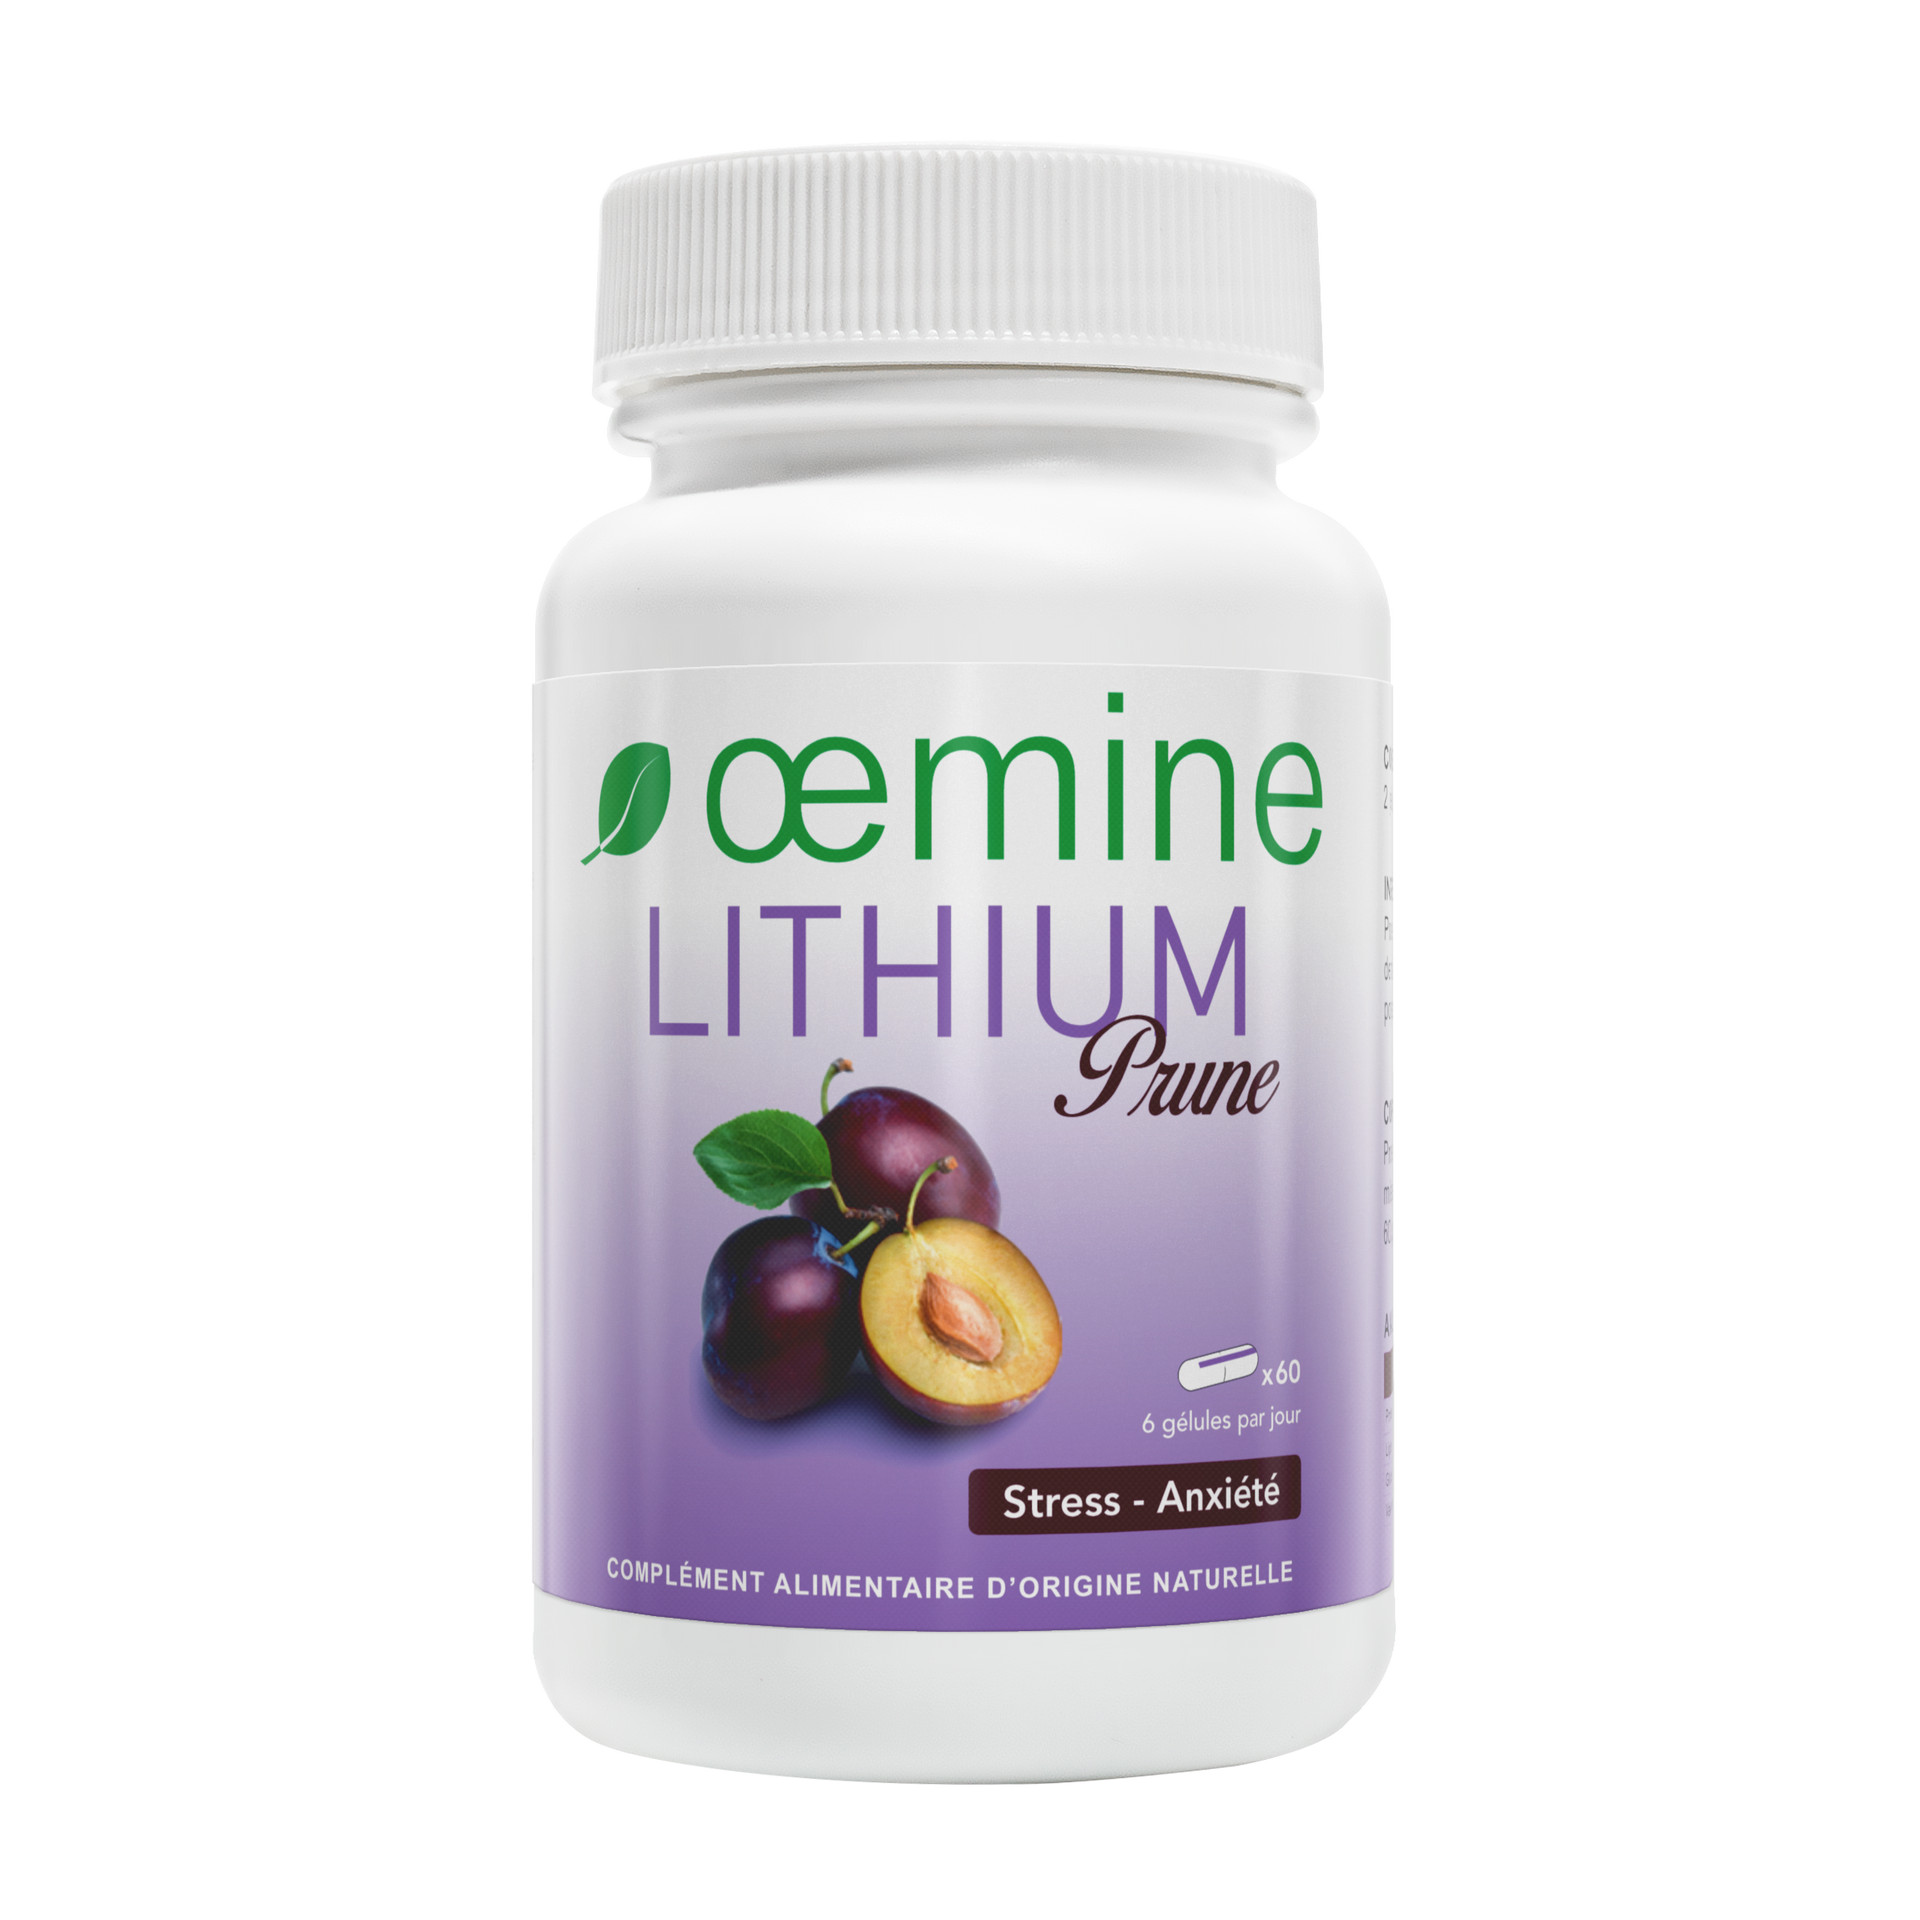 Lithium-prune : sevrage du tabac - 60 gélules - OEMINE